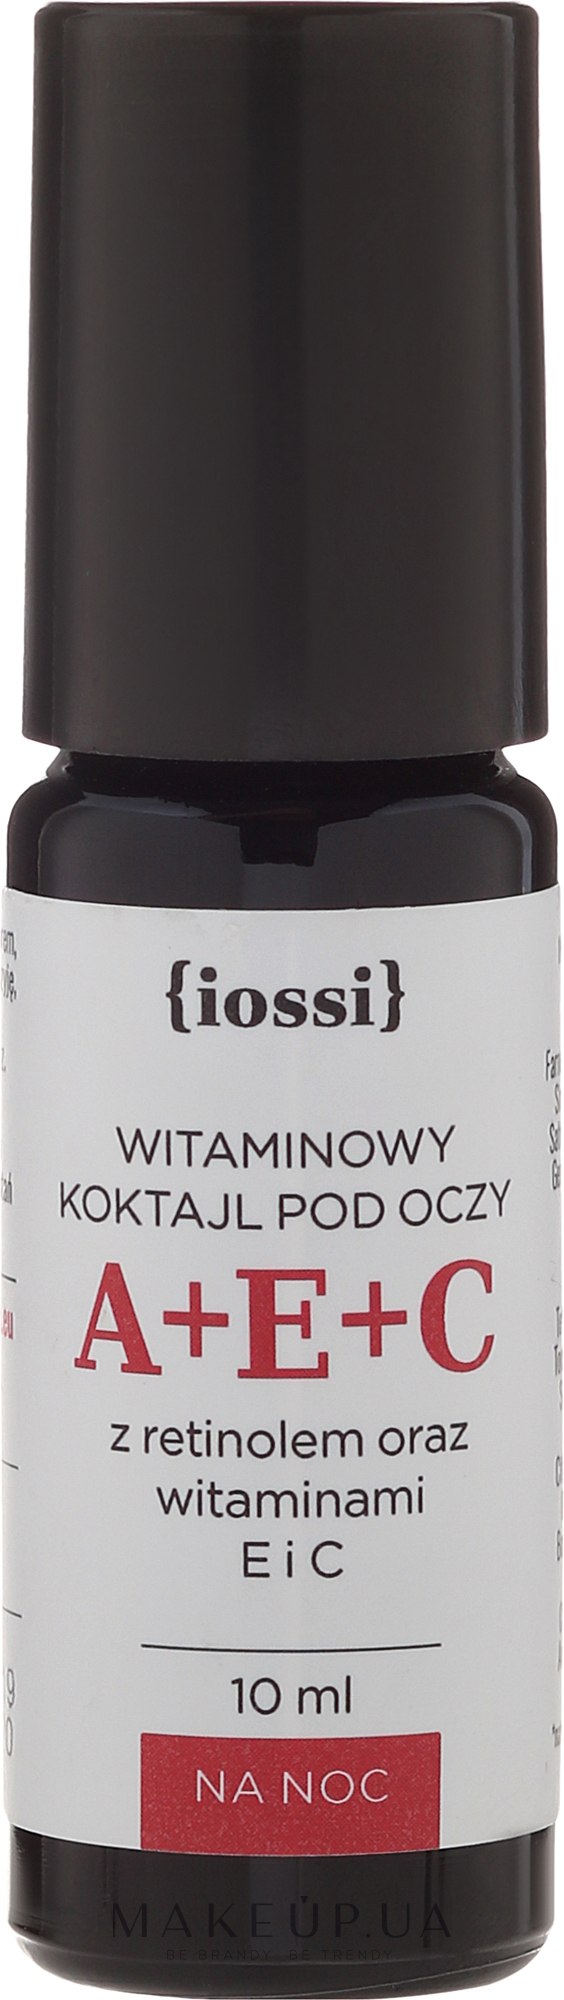 Витаминный коктейль для глаз на ночь - Iossi Vitamin Eye Cocktail A+E+C — фото 10ml